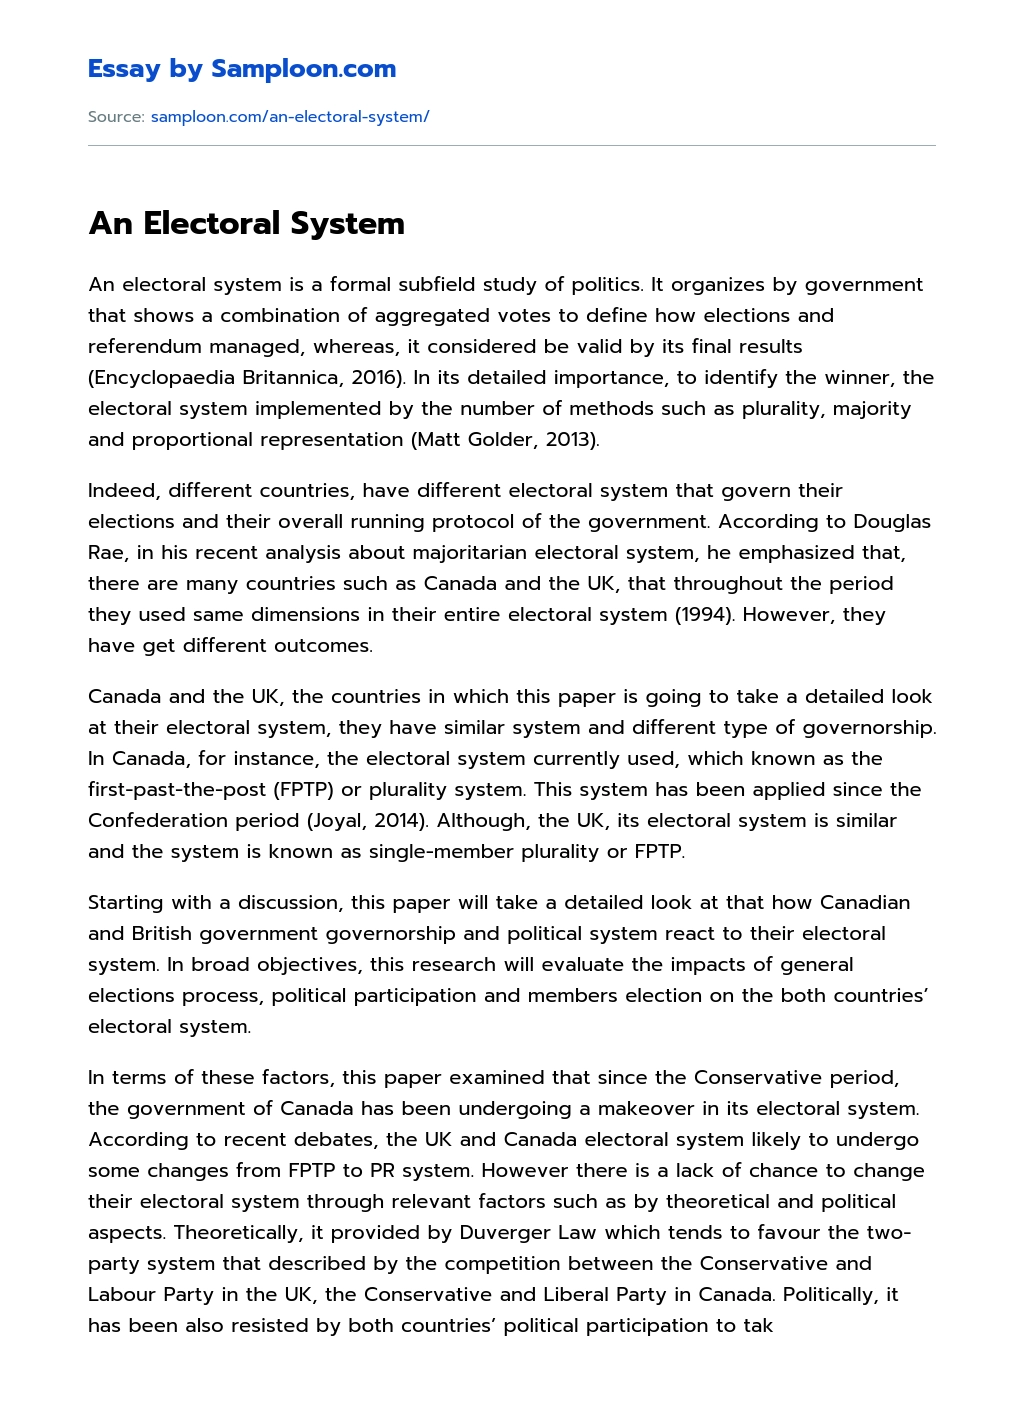 An Electoral System essay